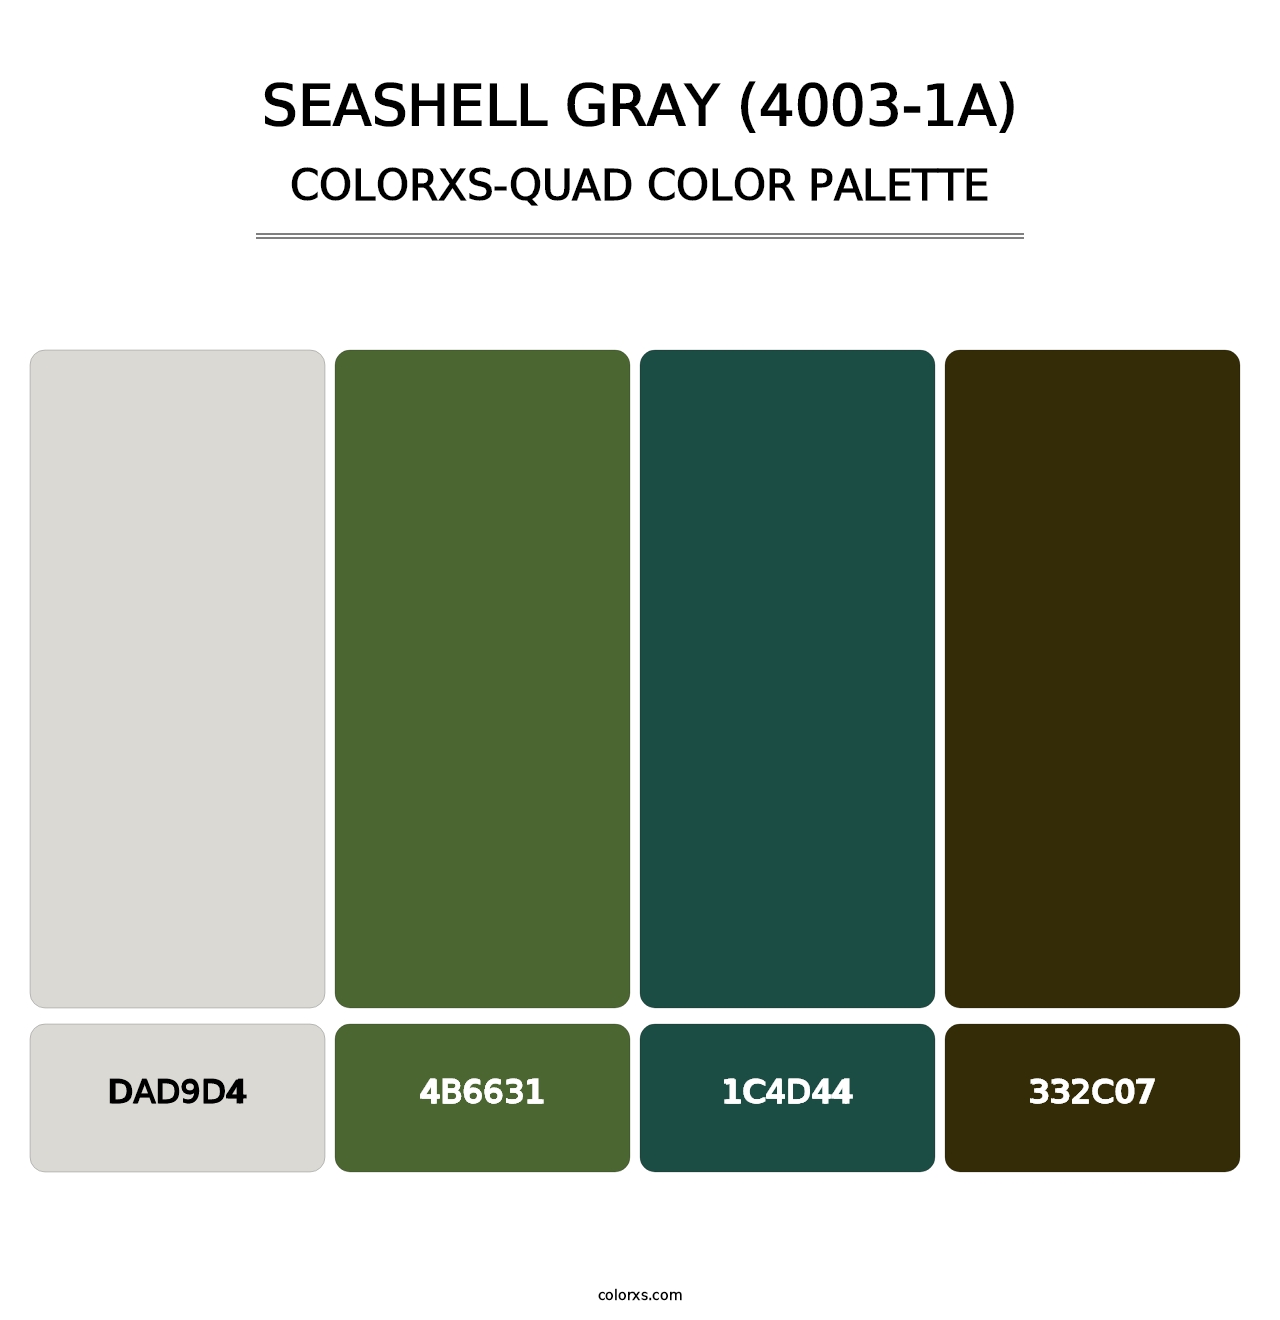 Seashell Gray (4003-1A) - Colorxs Quad Palette